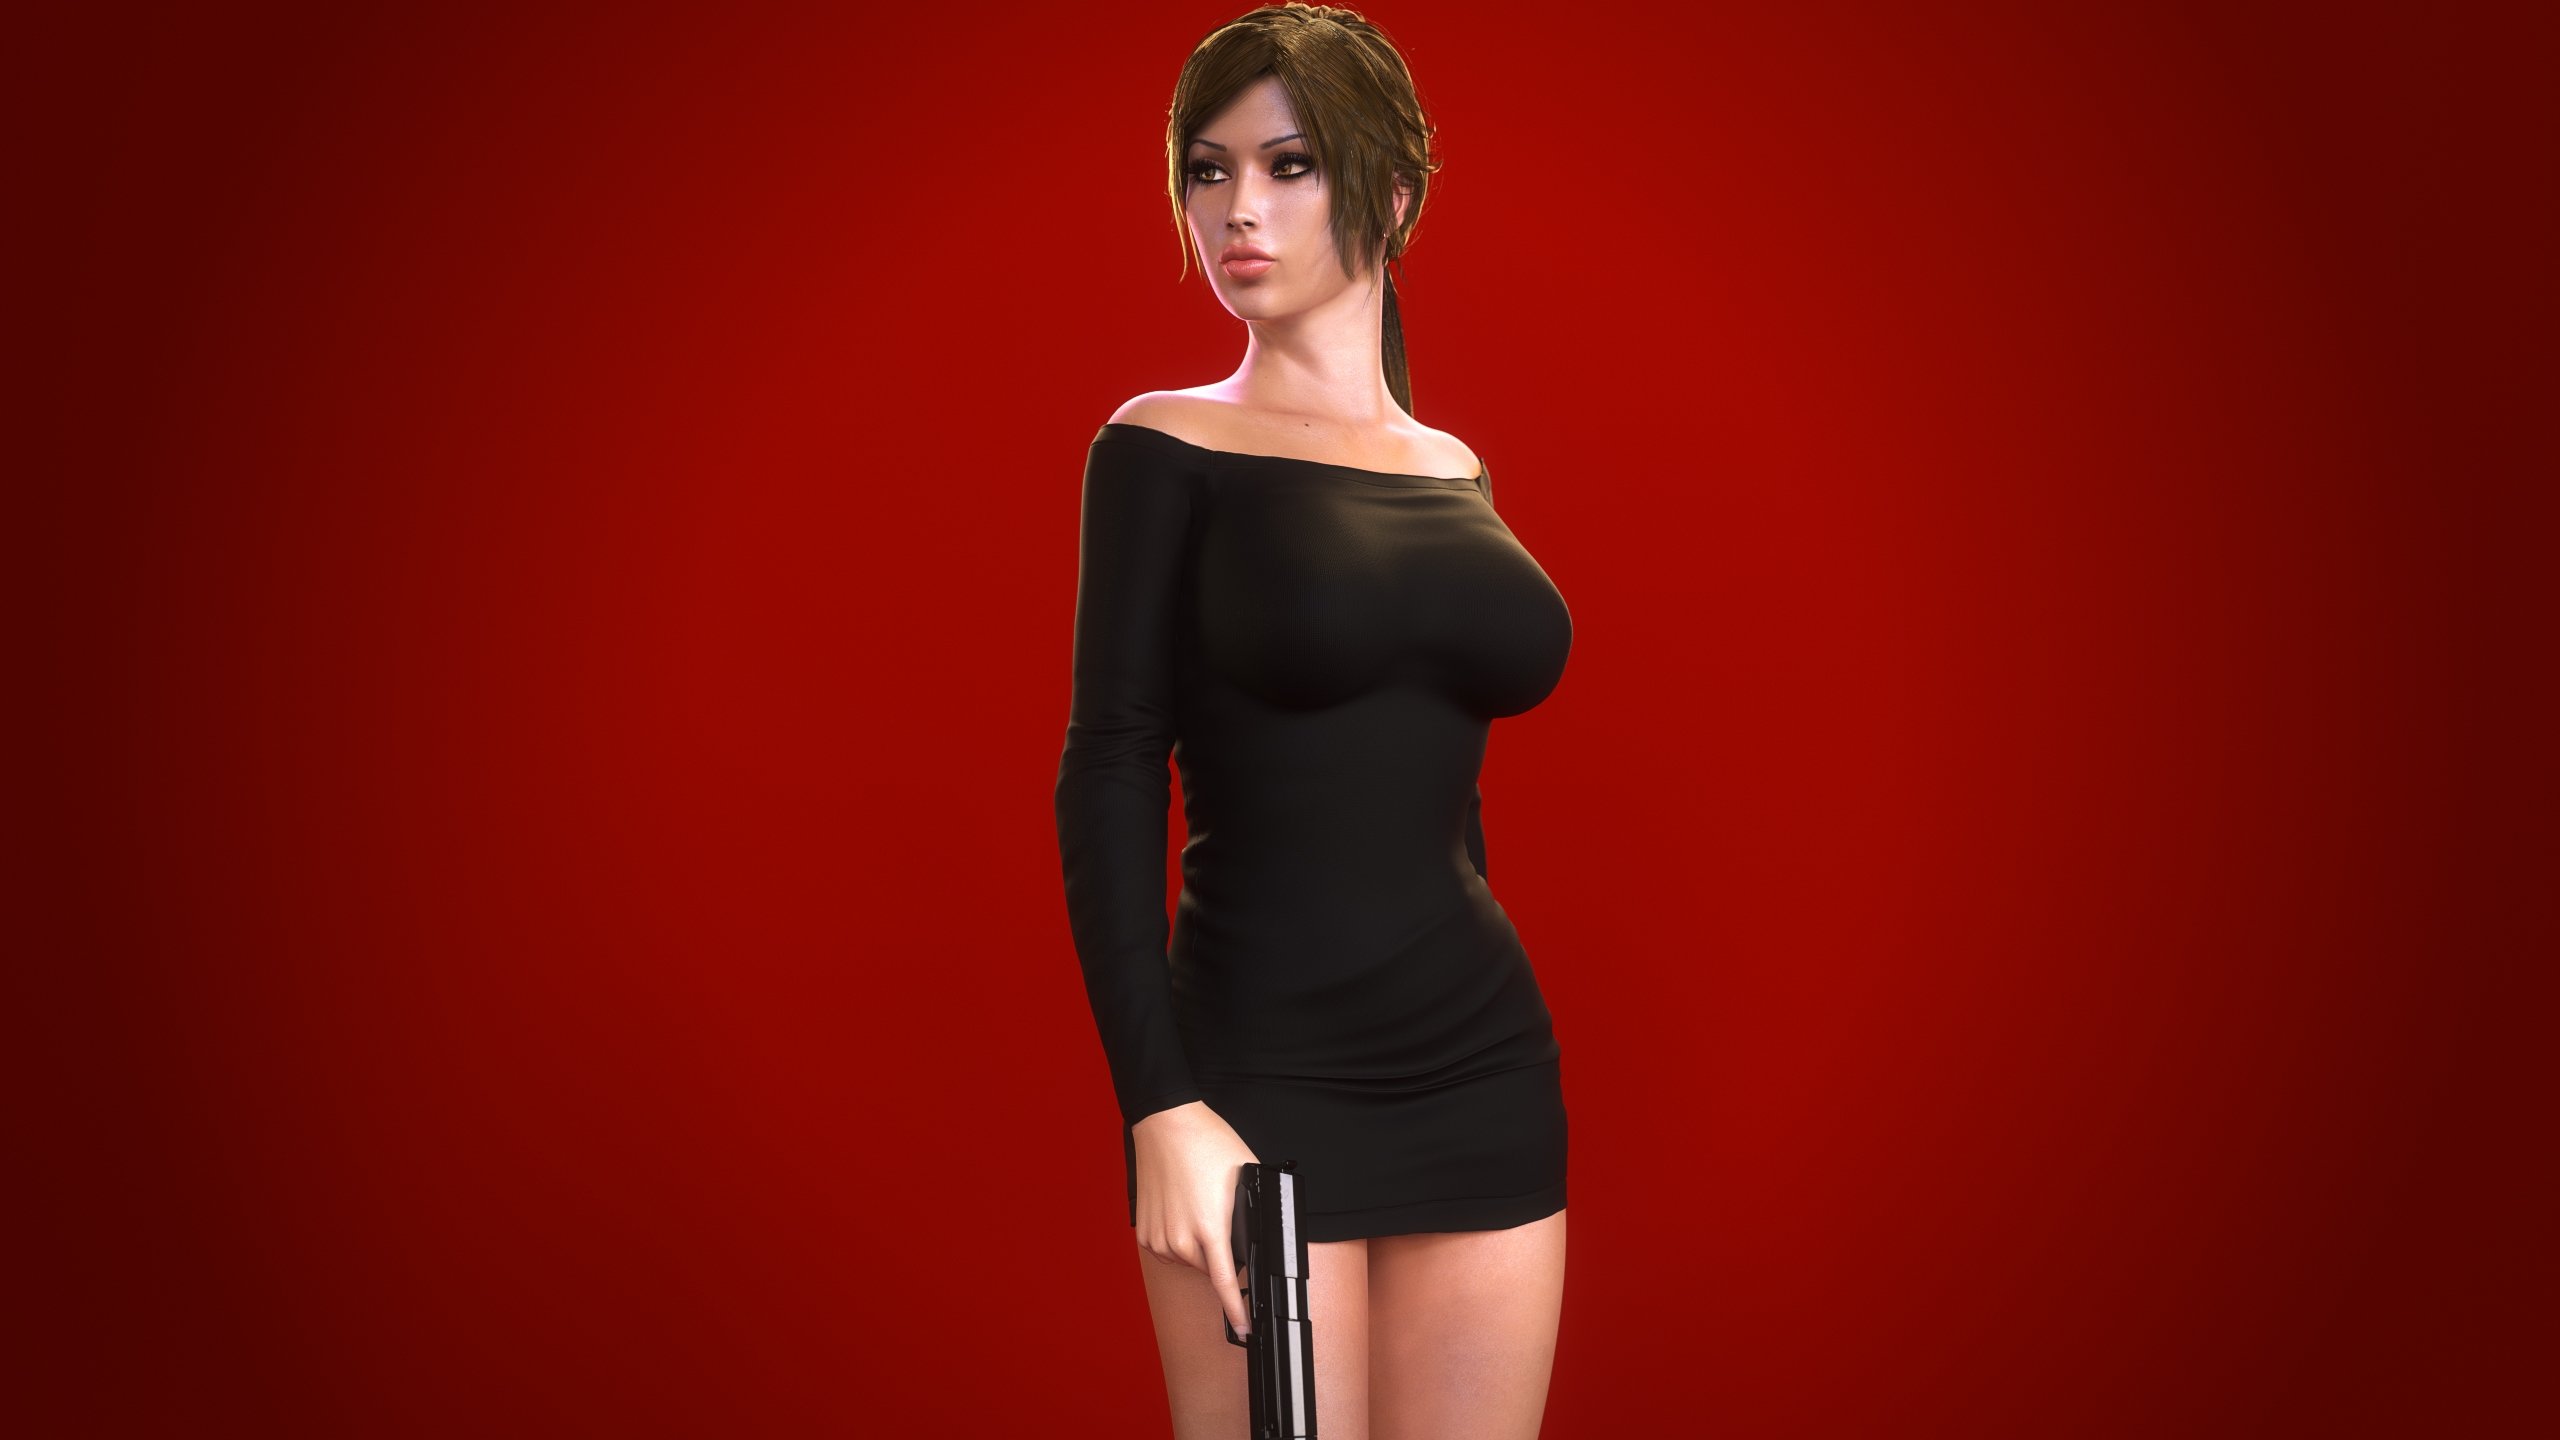 Best Tomb Raider (Lara Croft) background ID:437214 for High Resolution hd 2560x1440 computer